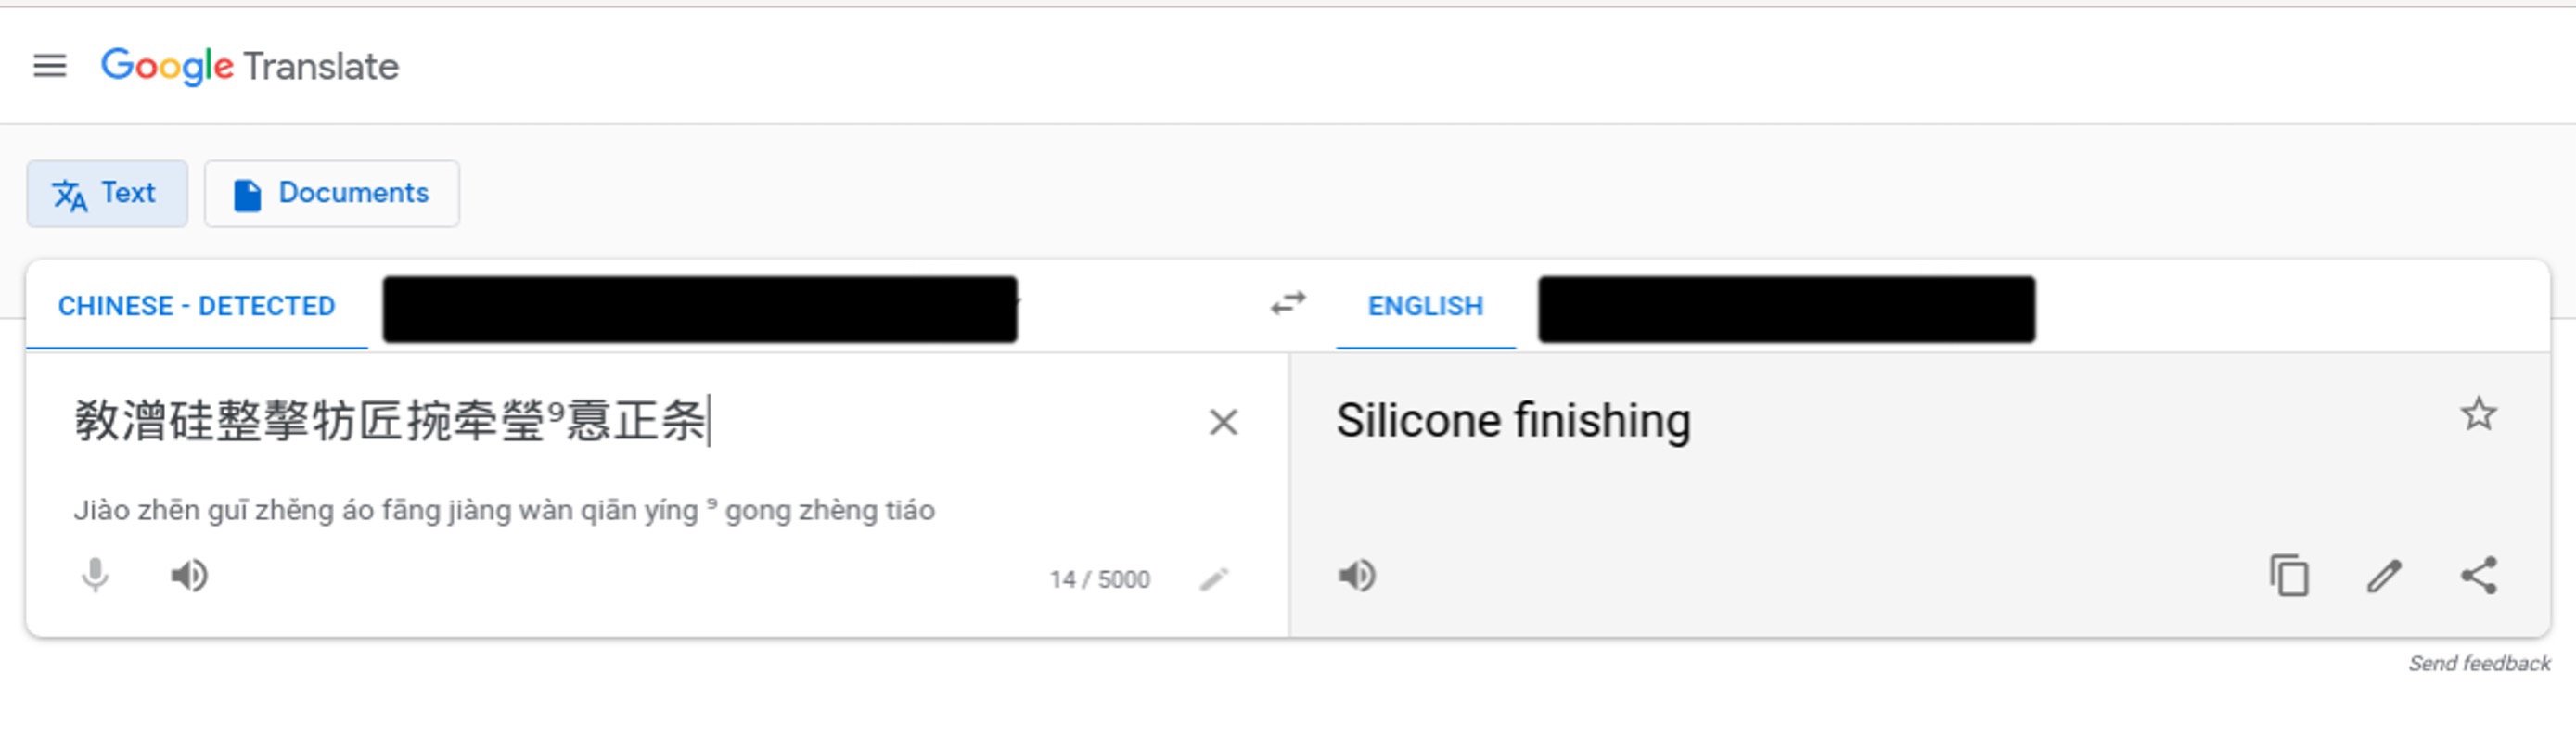 Google Translate showing suspicious HTTP user agent translation